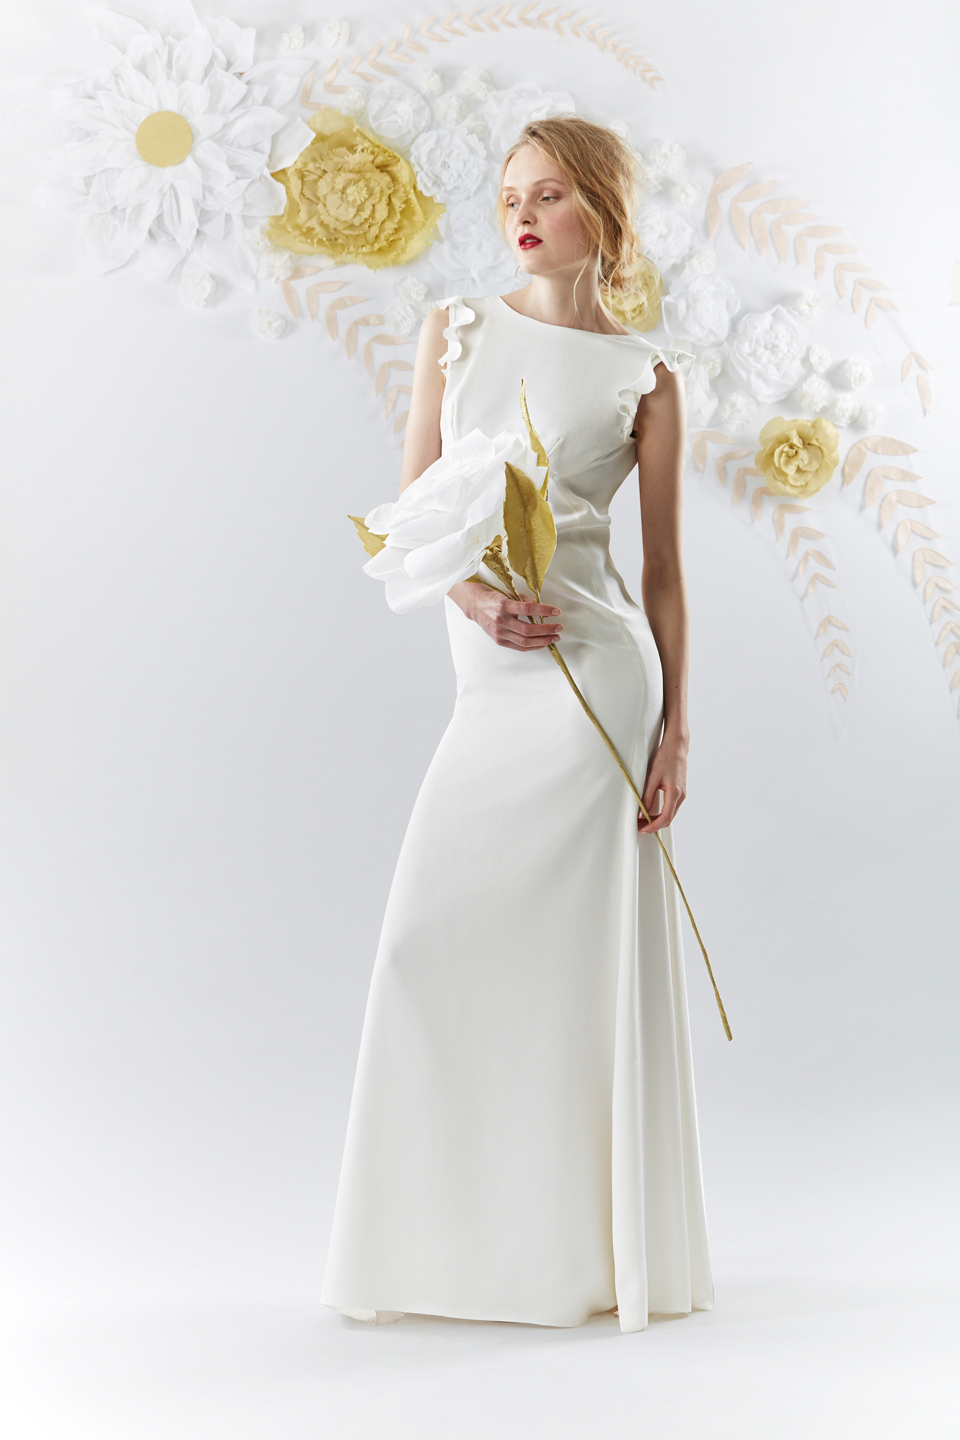 Olwen bourke, nature inspired wedding dresses